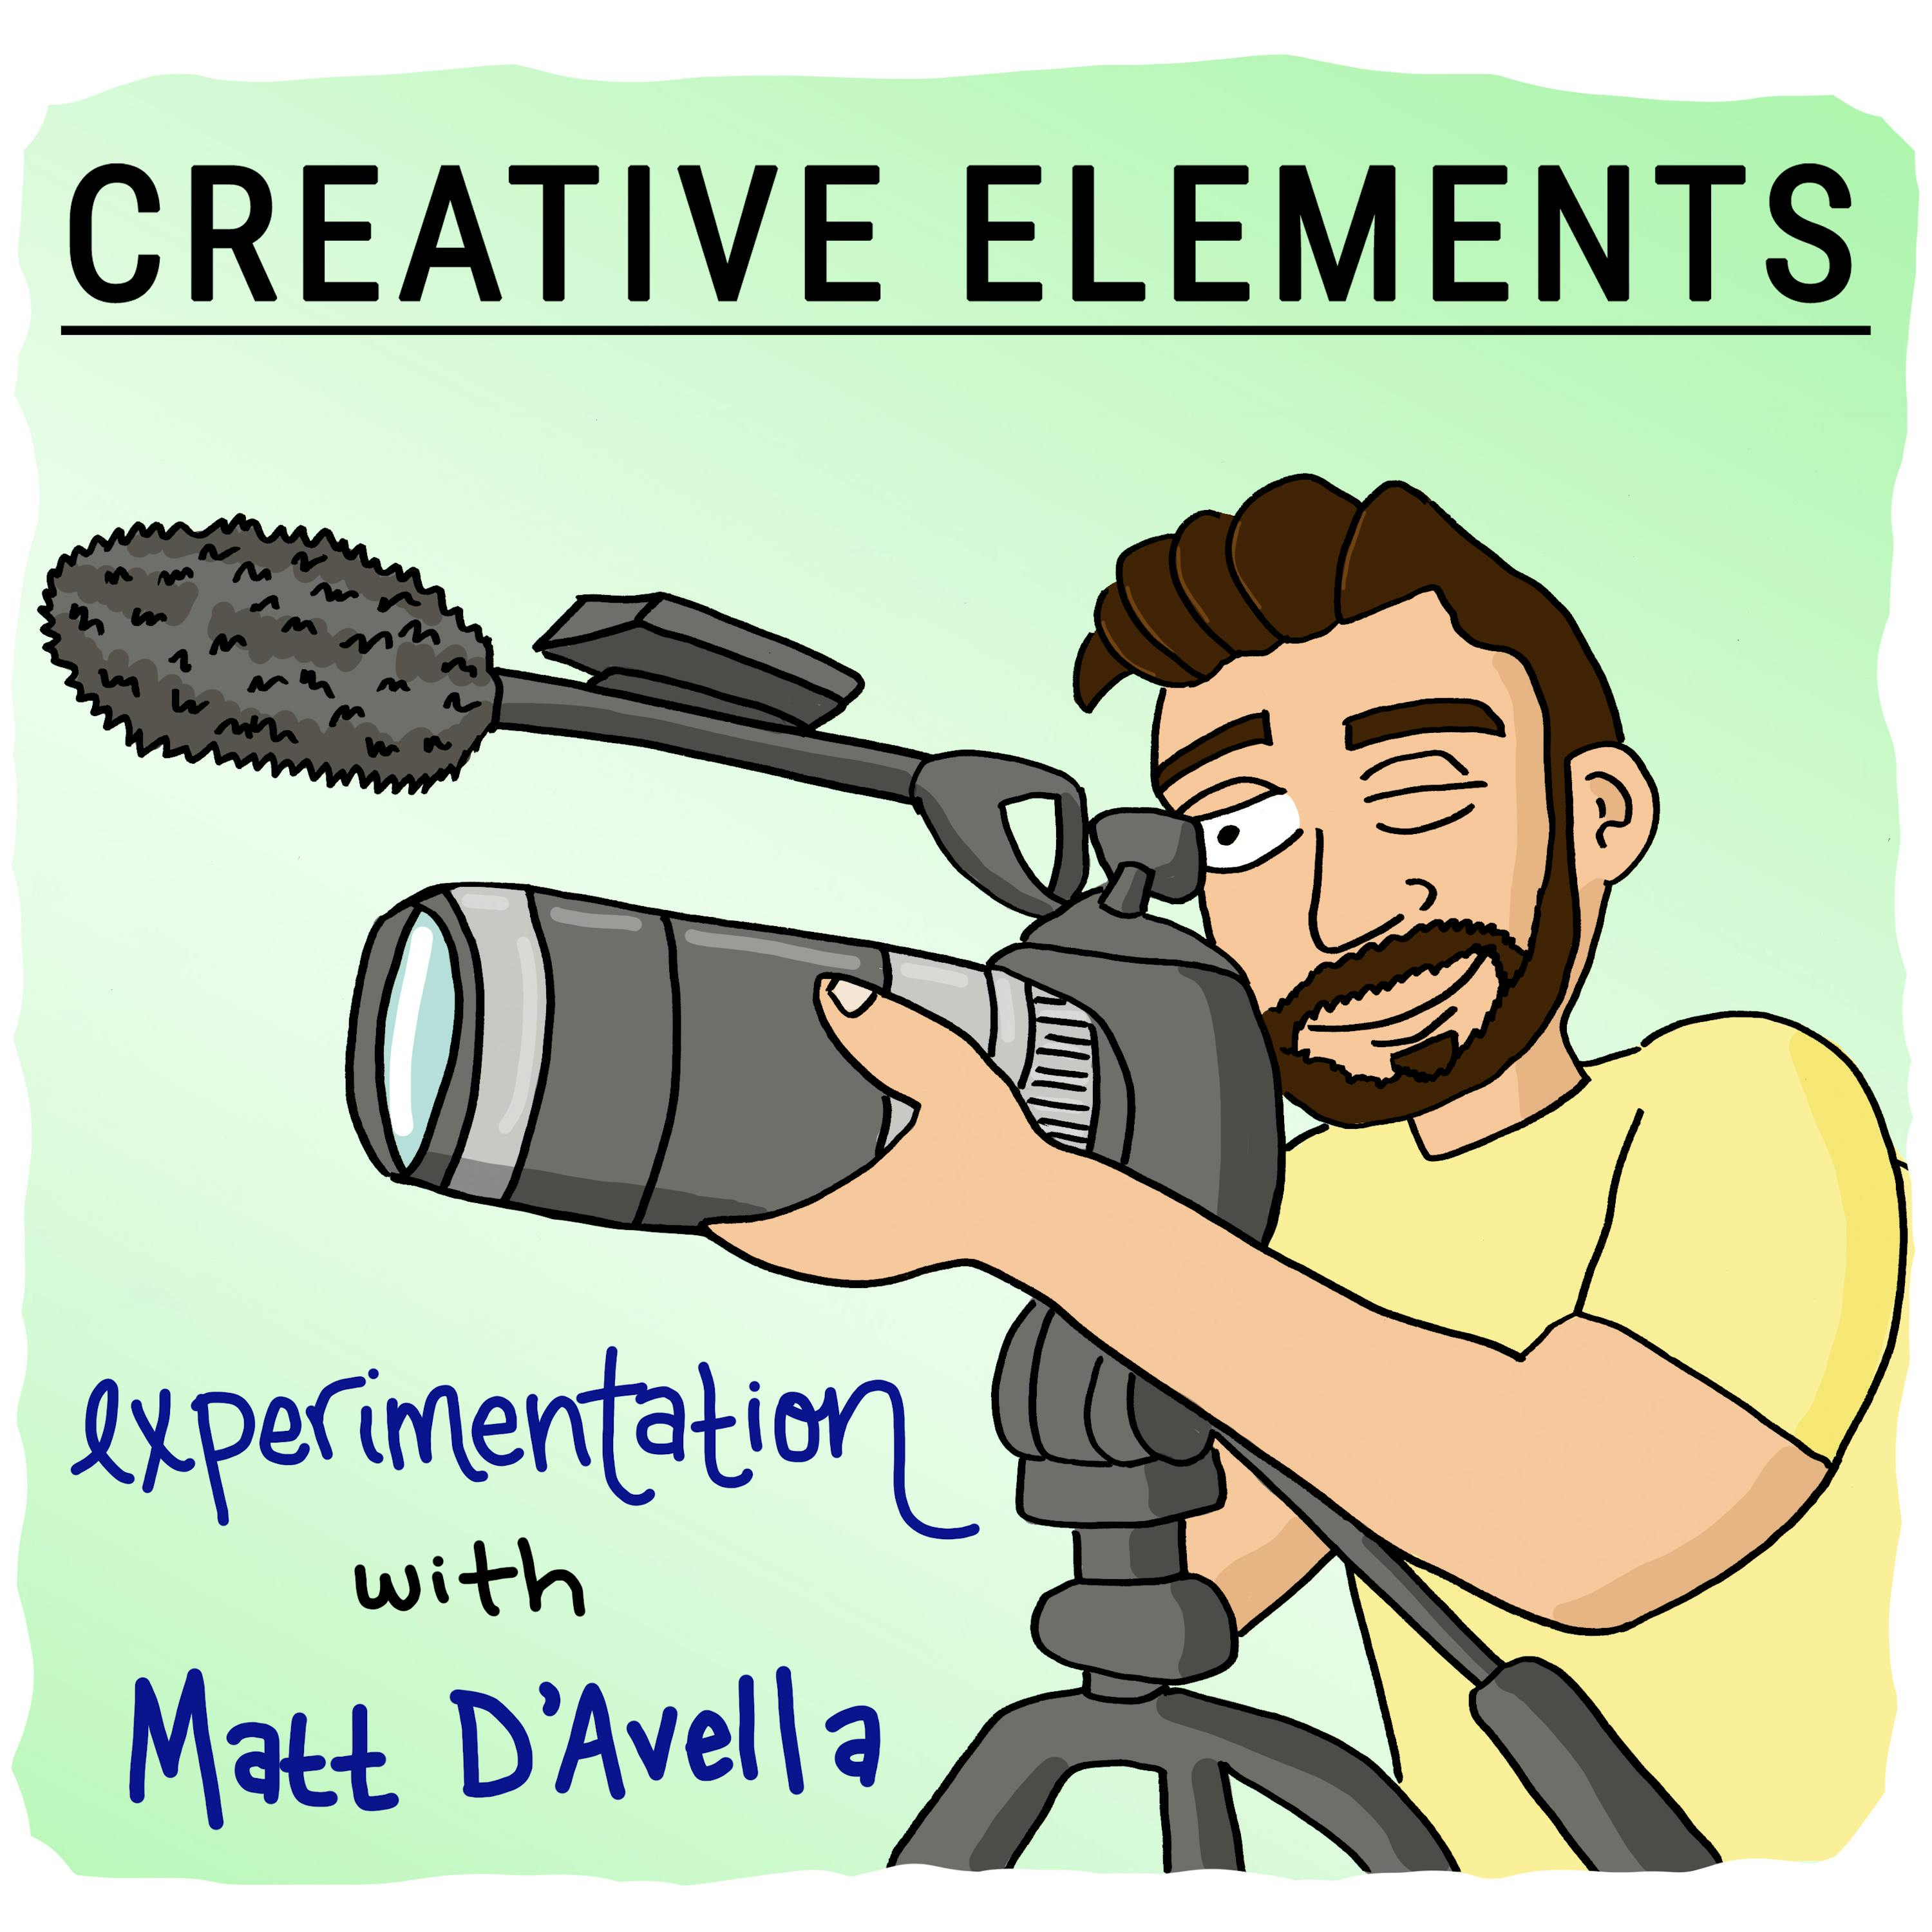 #21: Matt D'Avella [Experimentation]